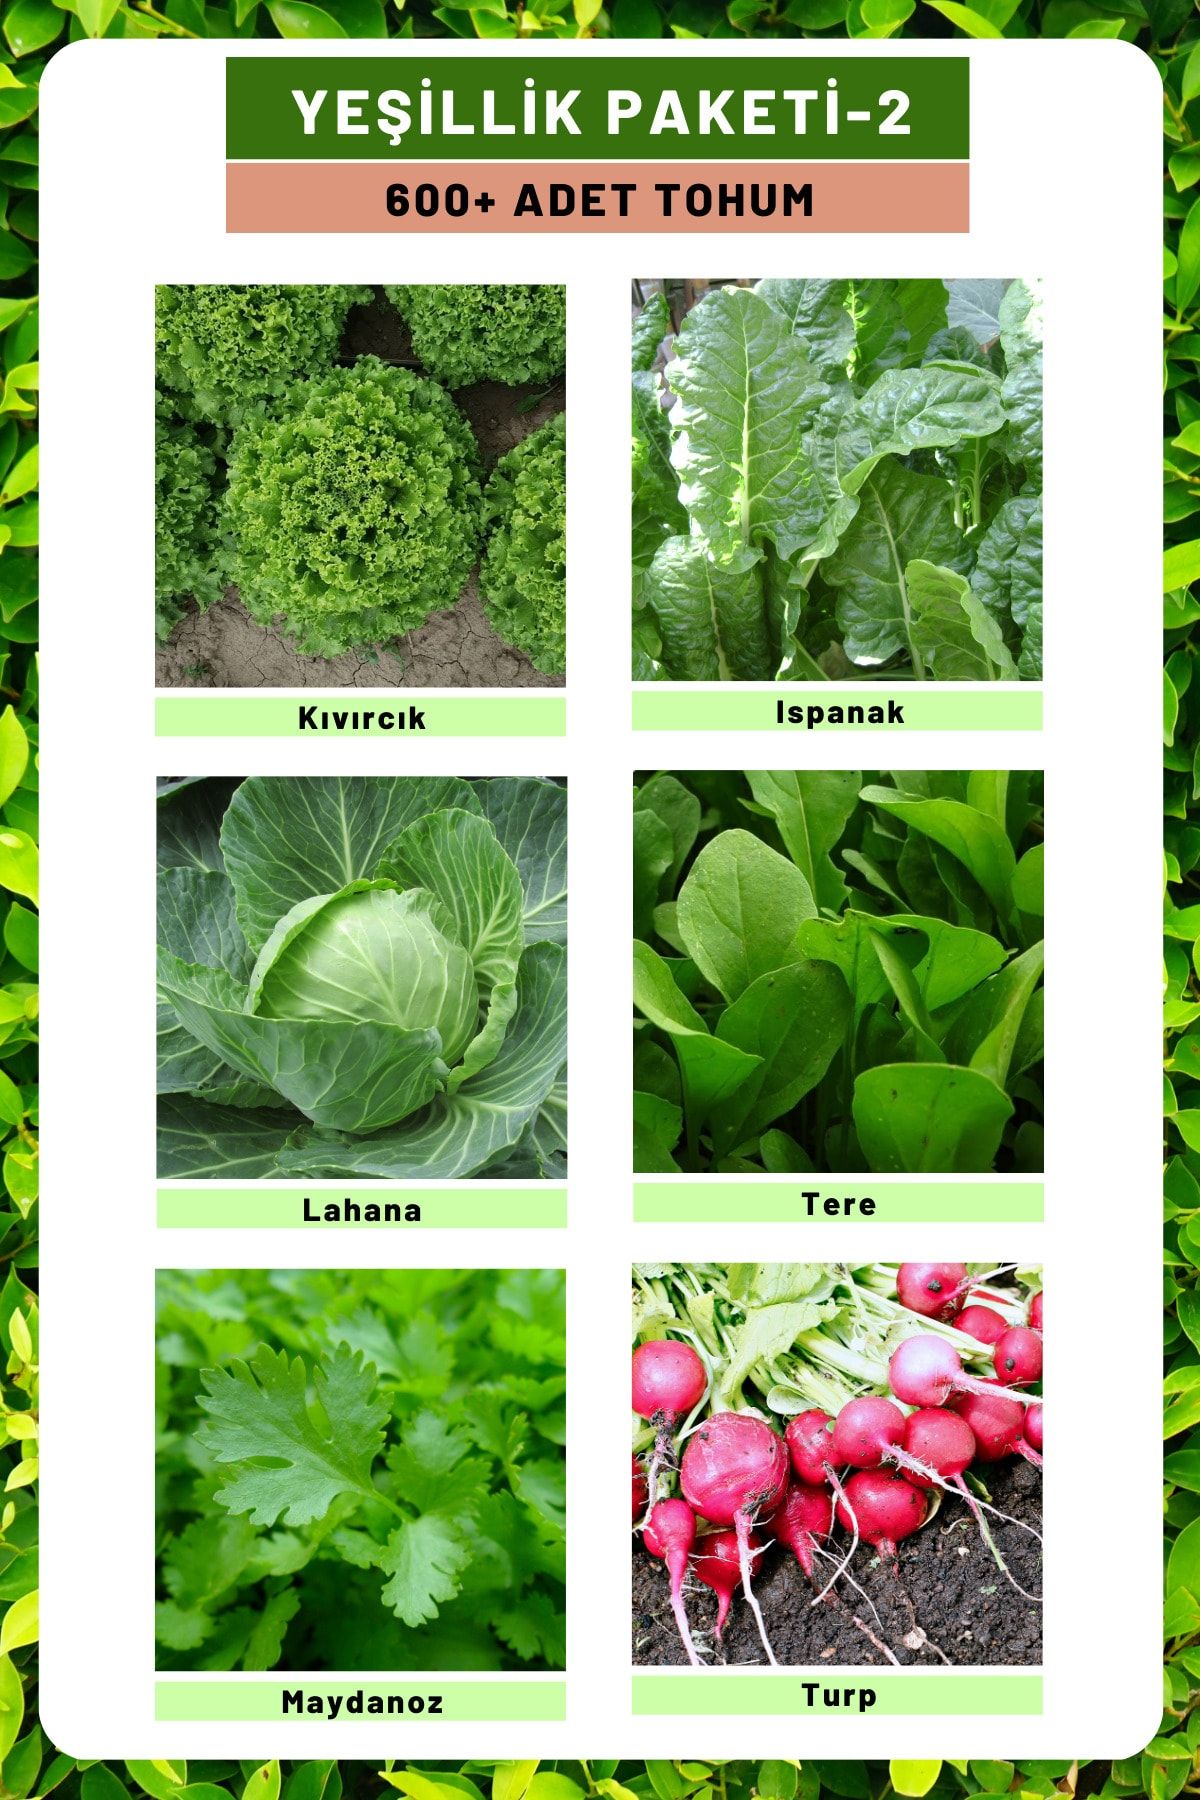 Tohum Seç Yeşillik Paketi-2 Kıvırcık, Ispanak, Lahana, Tere, Maydanoz, Turp, Tohum Seti 600+ Adet Tohum